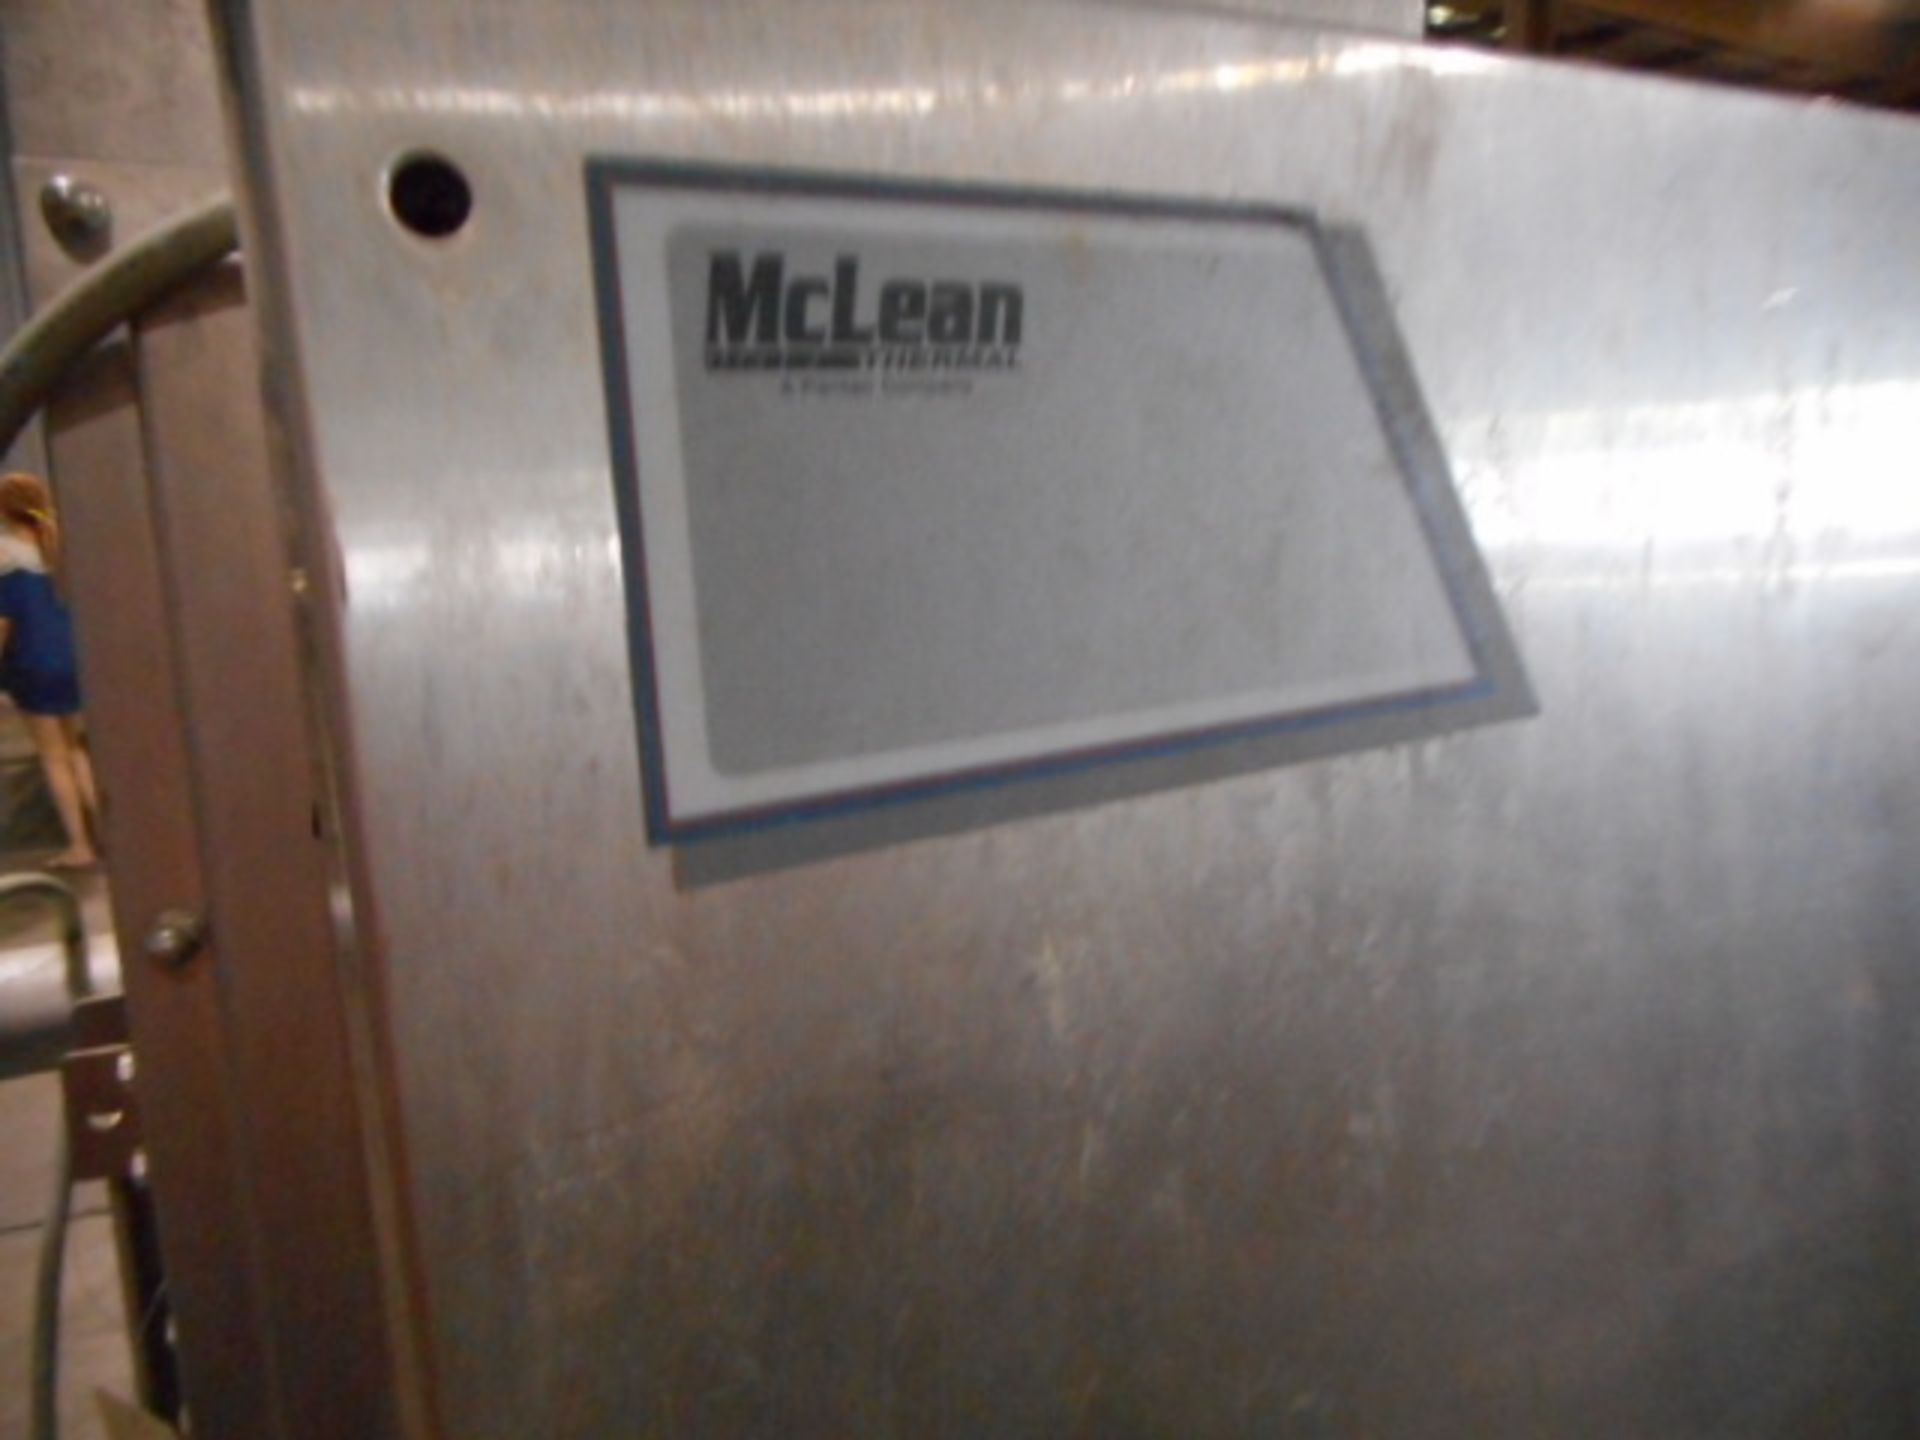 McClean X-Ray Machine, Model #CR29-0426-G054, Serial #09000945-1Ê - Image 2 of 3